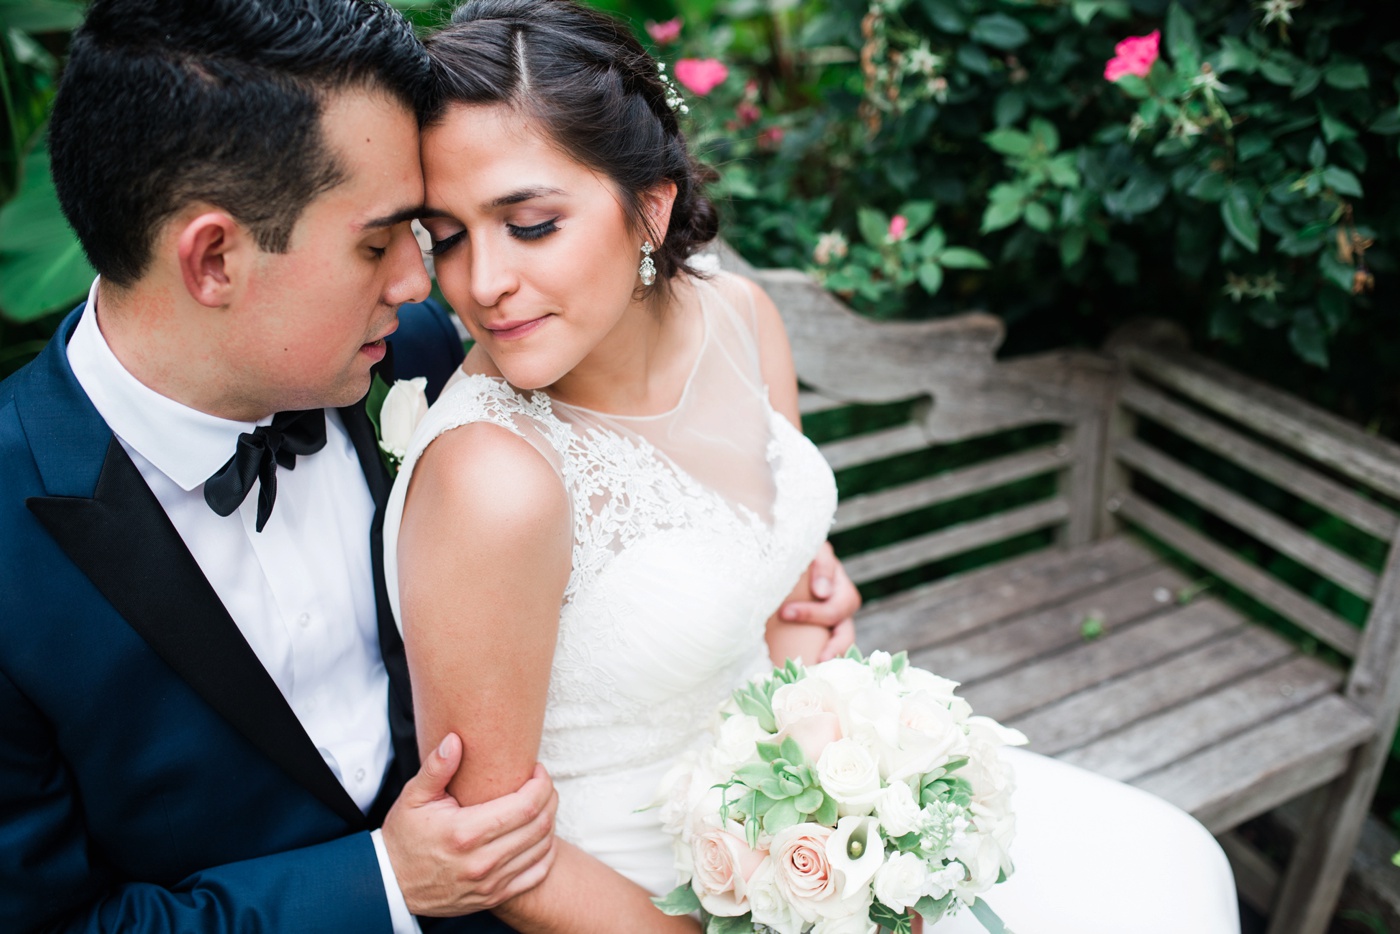 Daniela + Franco - Celebrate at Snug Harbor Wedding - Staten Island New York Wedding Photographer - Alison Dunn Photography photo